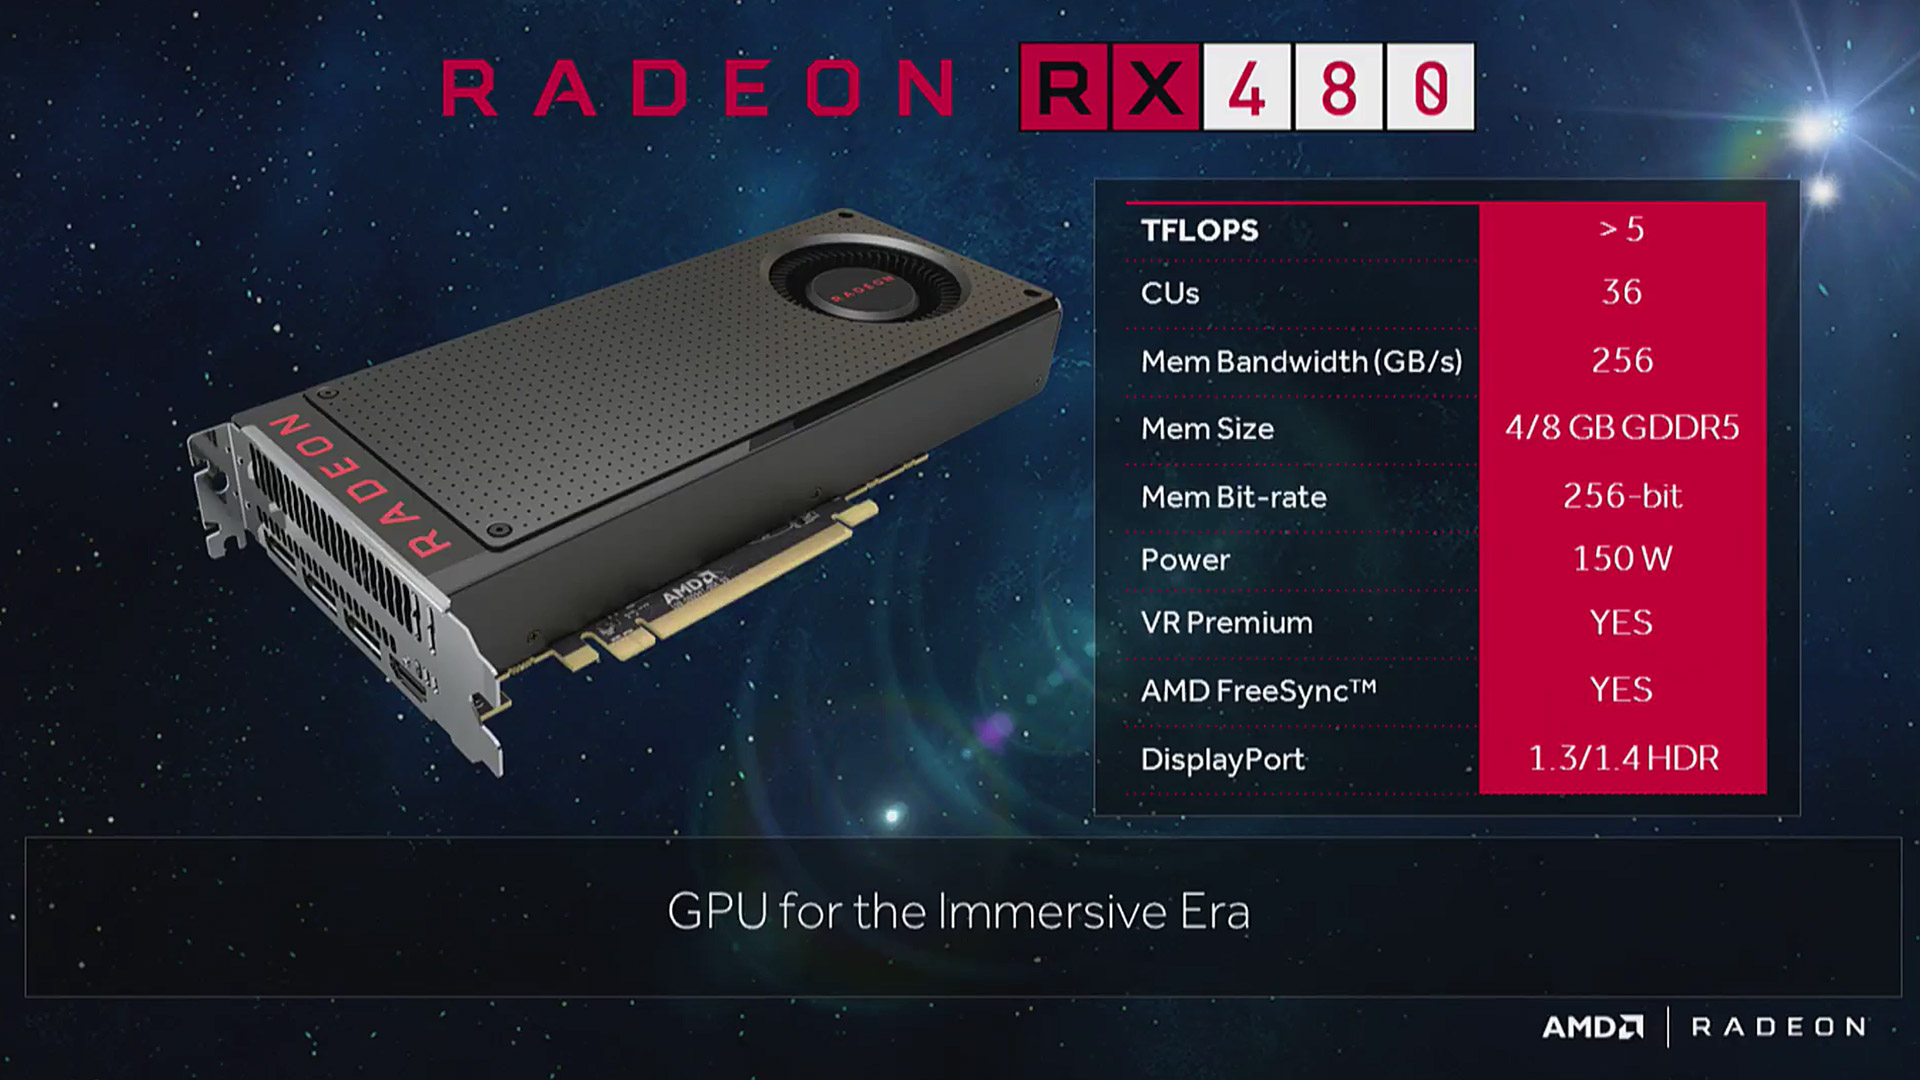 Mining with Radeon (TM) RX Graphics - BetterHash Calculator